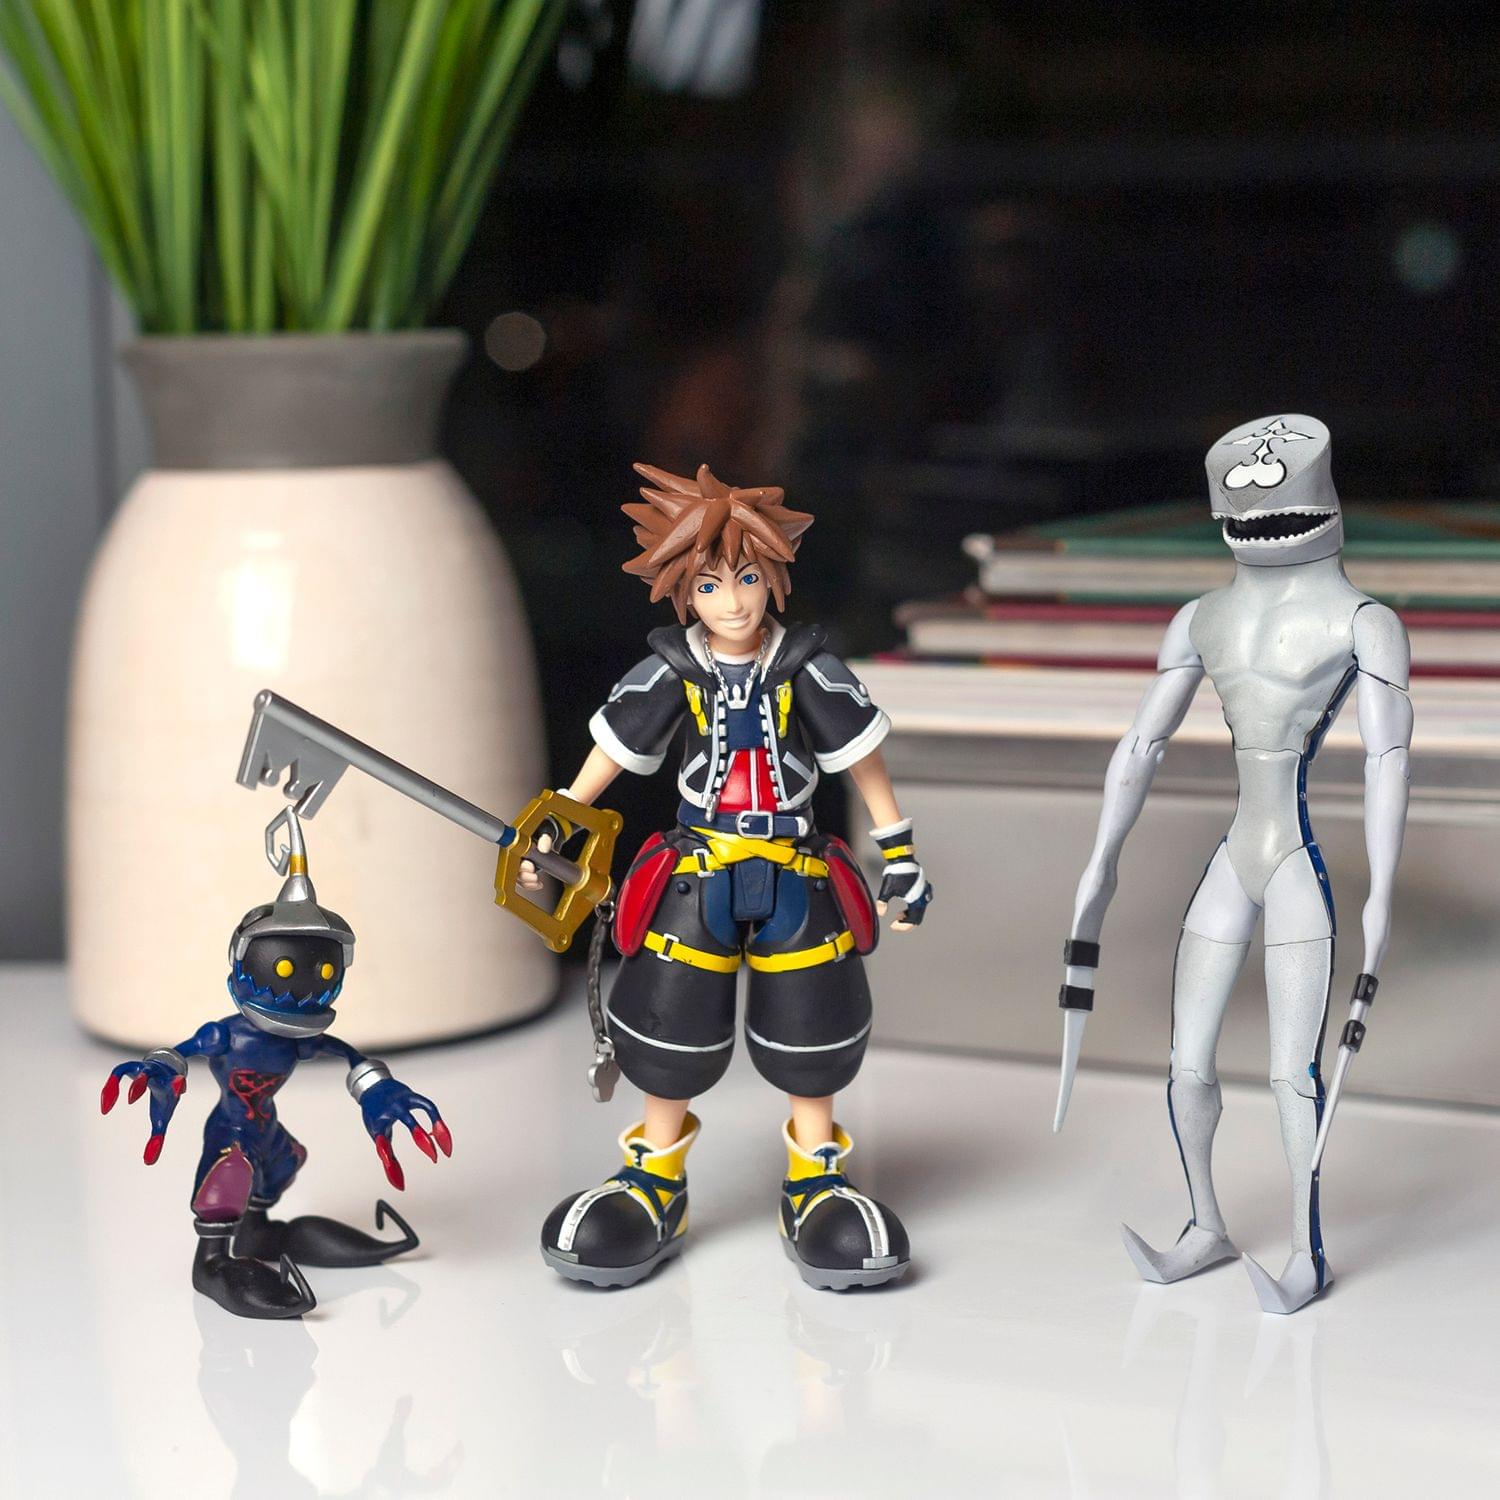 Kingdom Hearts 2 Action Figures Collection Set | Includes Sora, Dusk, & Soldier